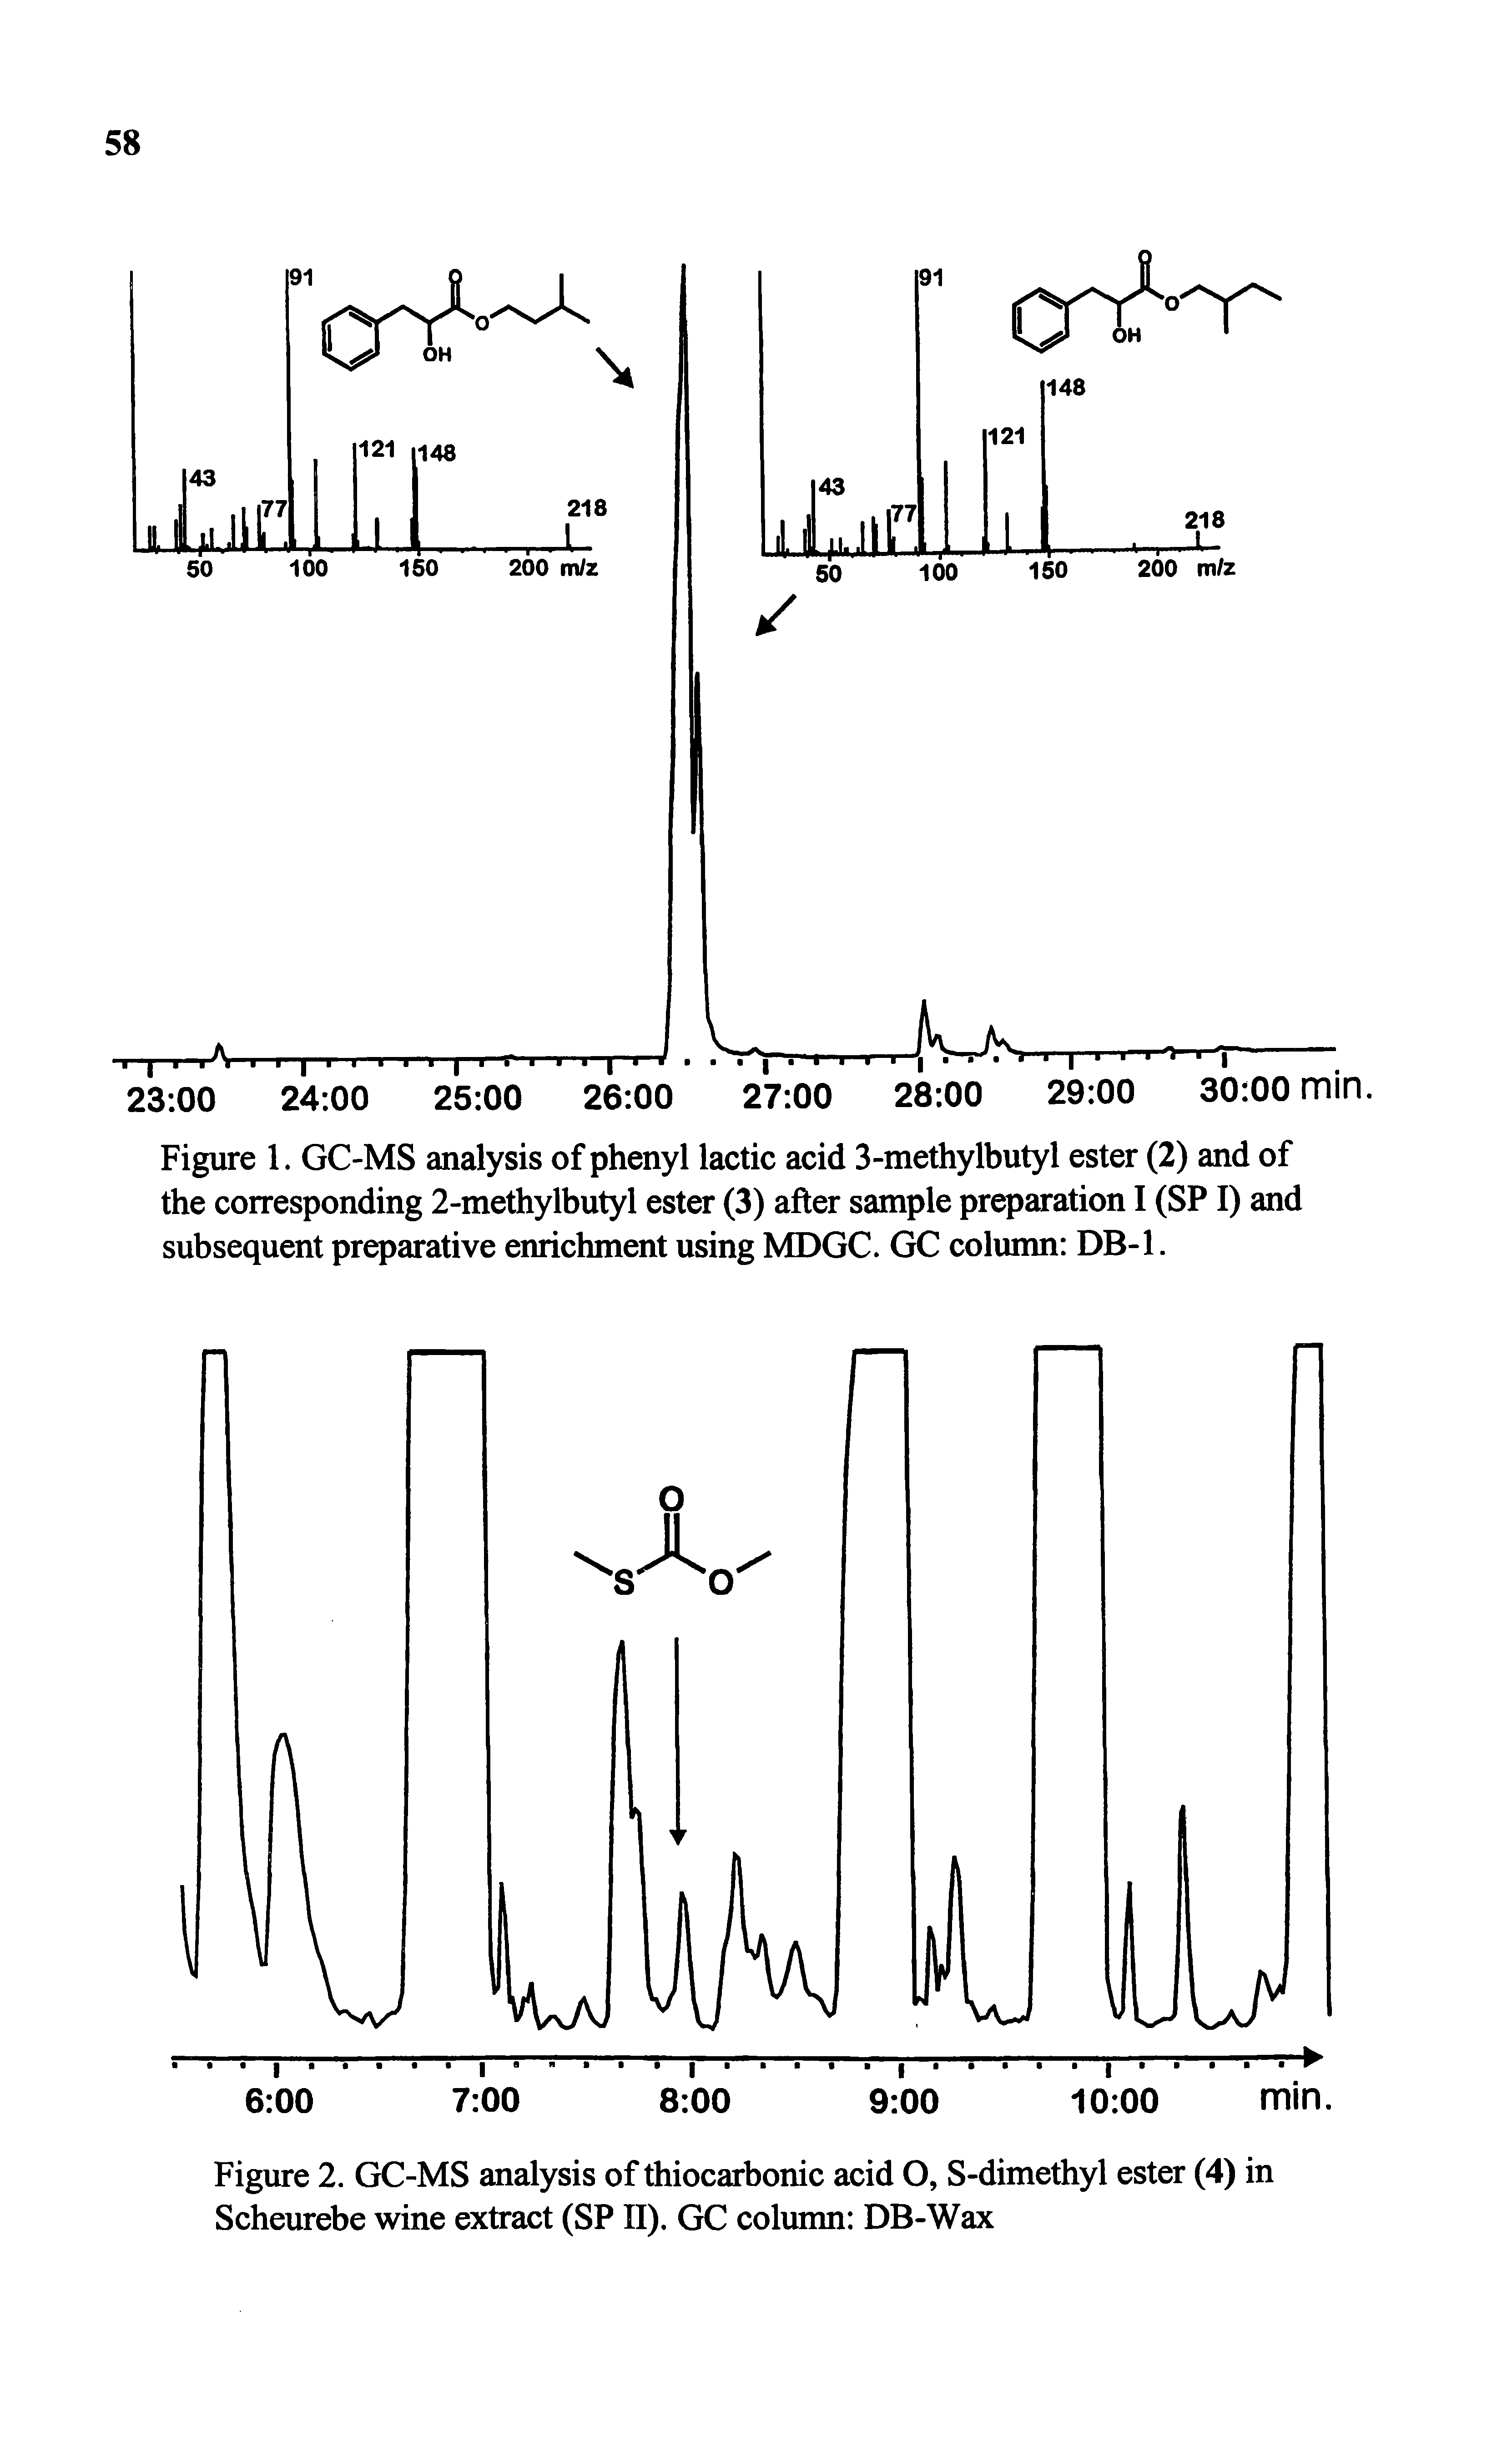 Figure 2. GC-MS analysis of thiocarbonic acid O, S-dimethyl ester (4) in Scheurebe wine extract (SP II). GC column DB-Wax...